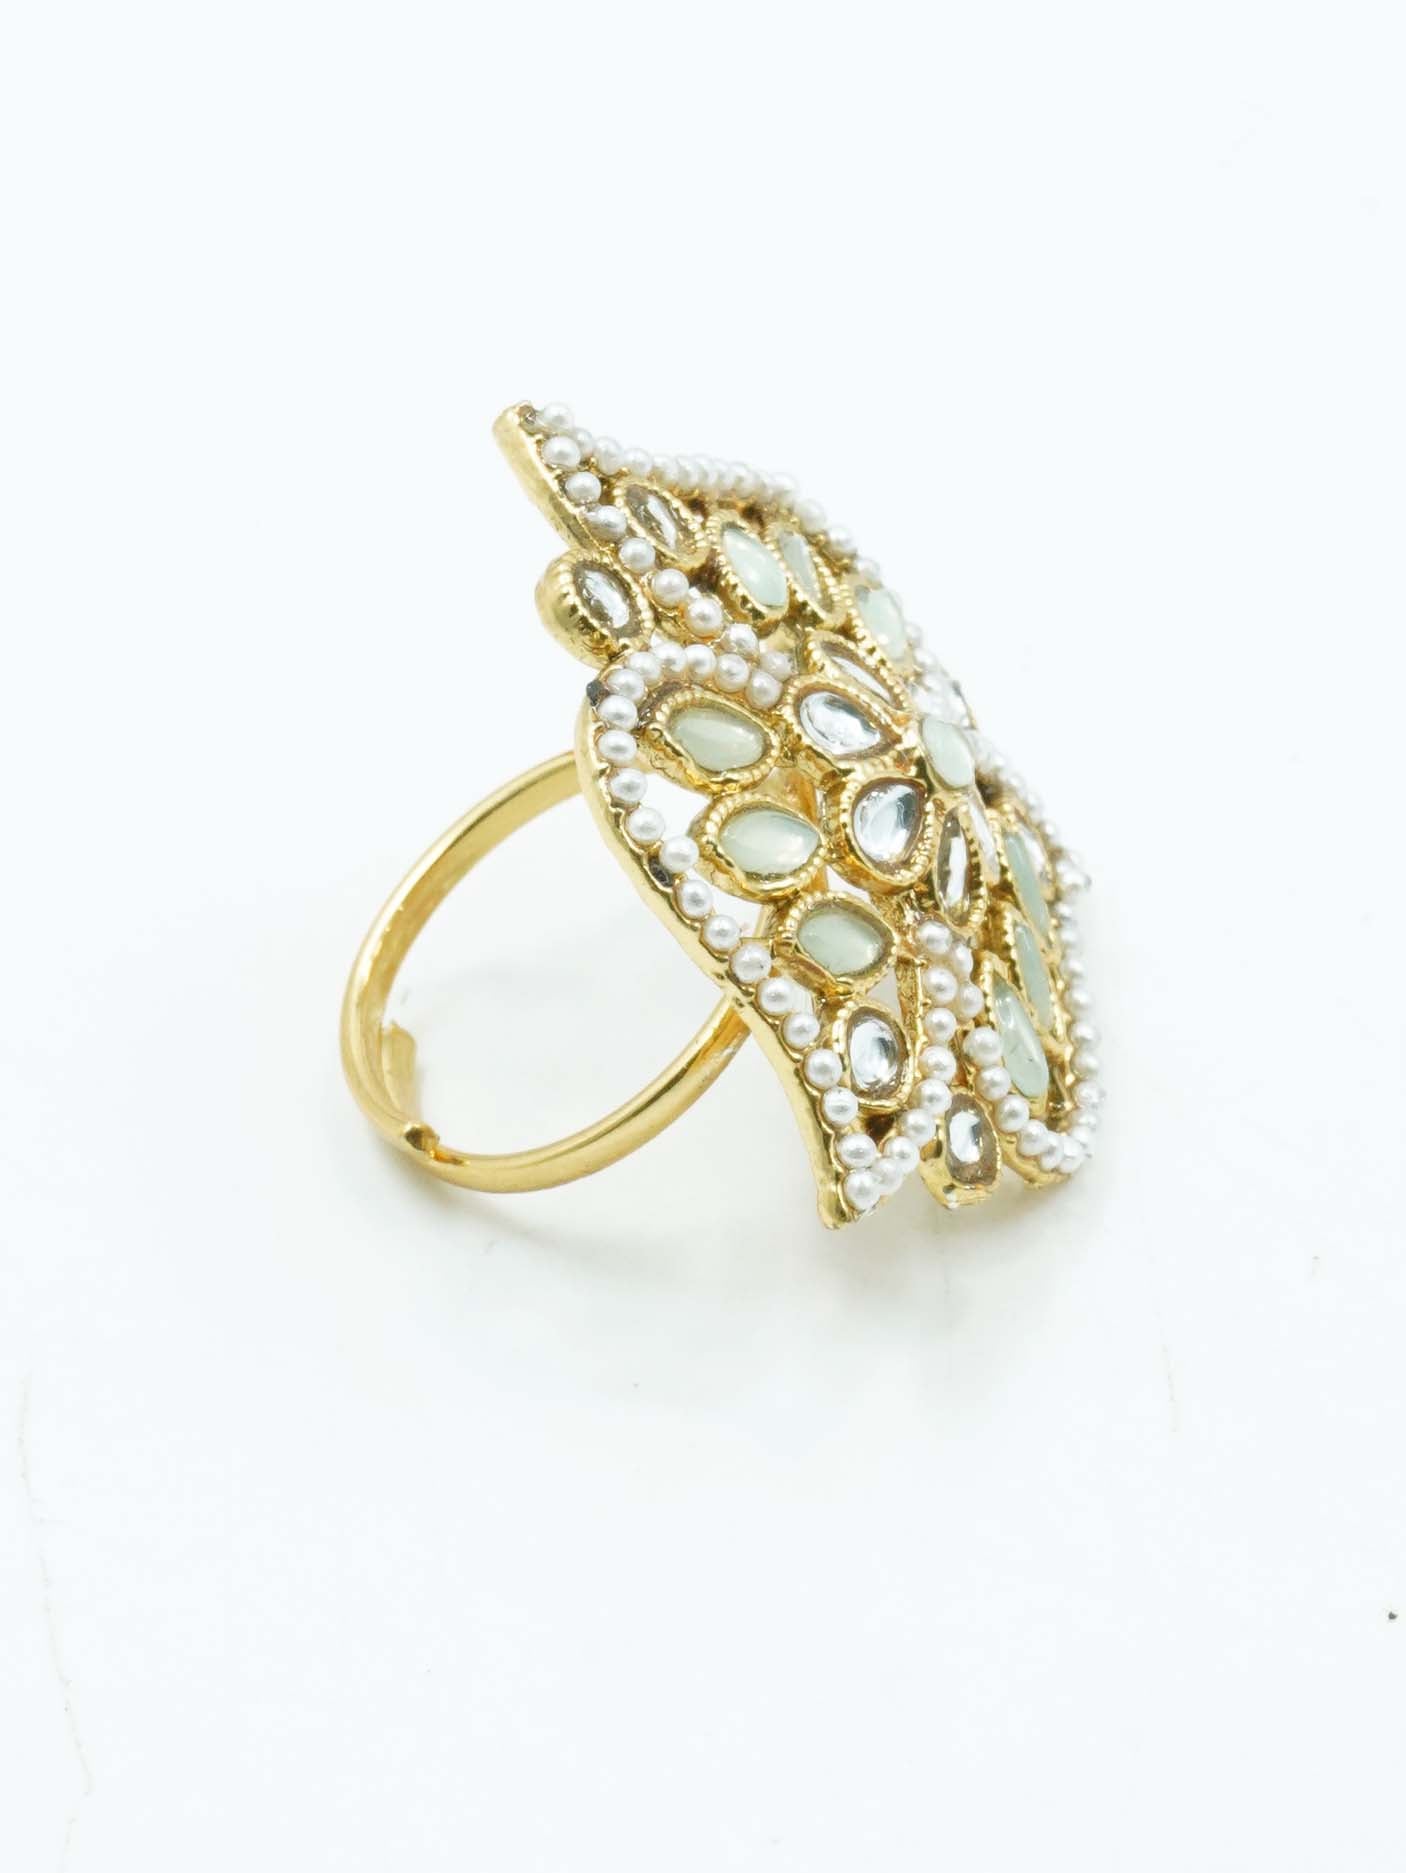 Antique Gold Plated Adjustable Size Designer Finger ring with Stones 10923N